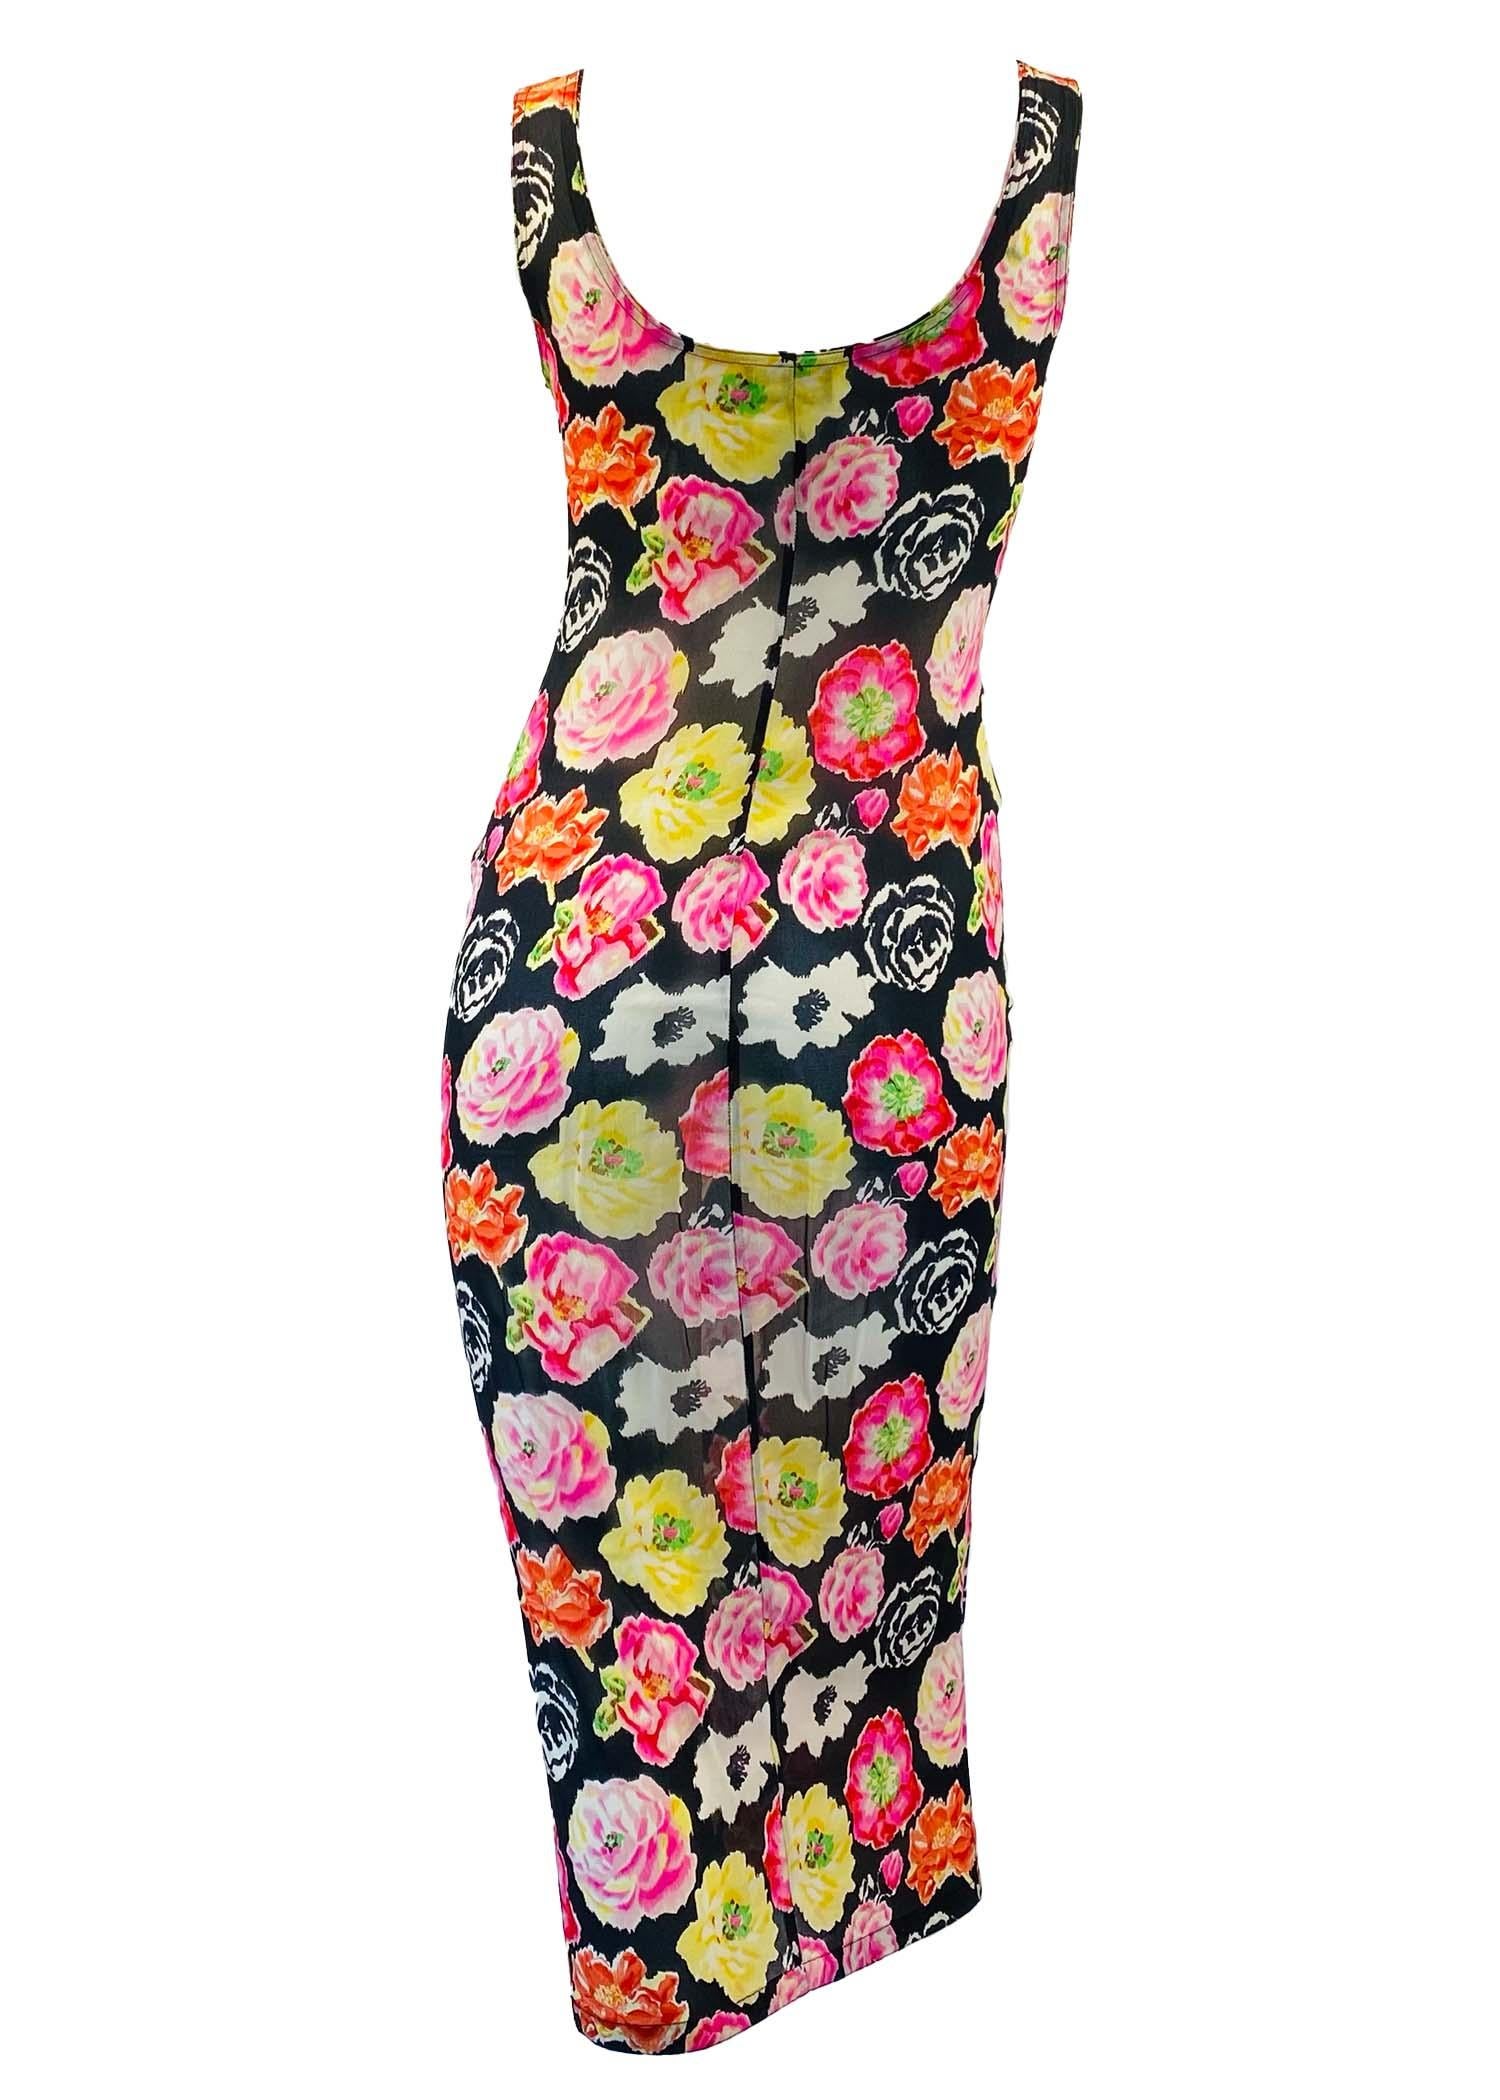 Beige S/S 1995 Gianni Versace Floral Print Semi-Sheer Runway Slip Wiggle Dress  For Sale